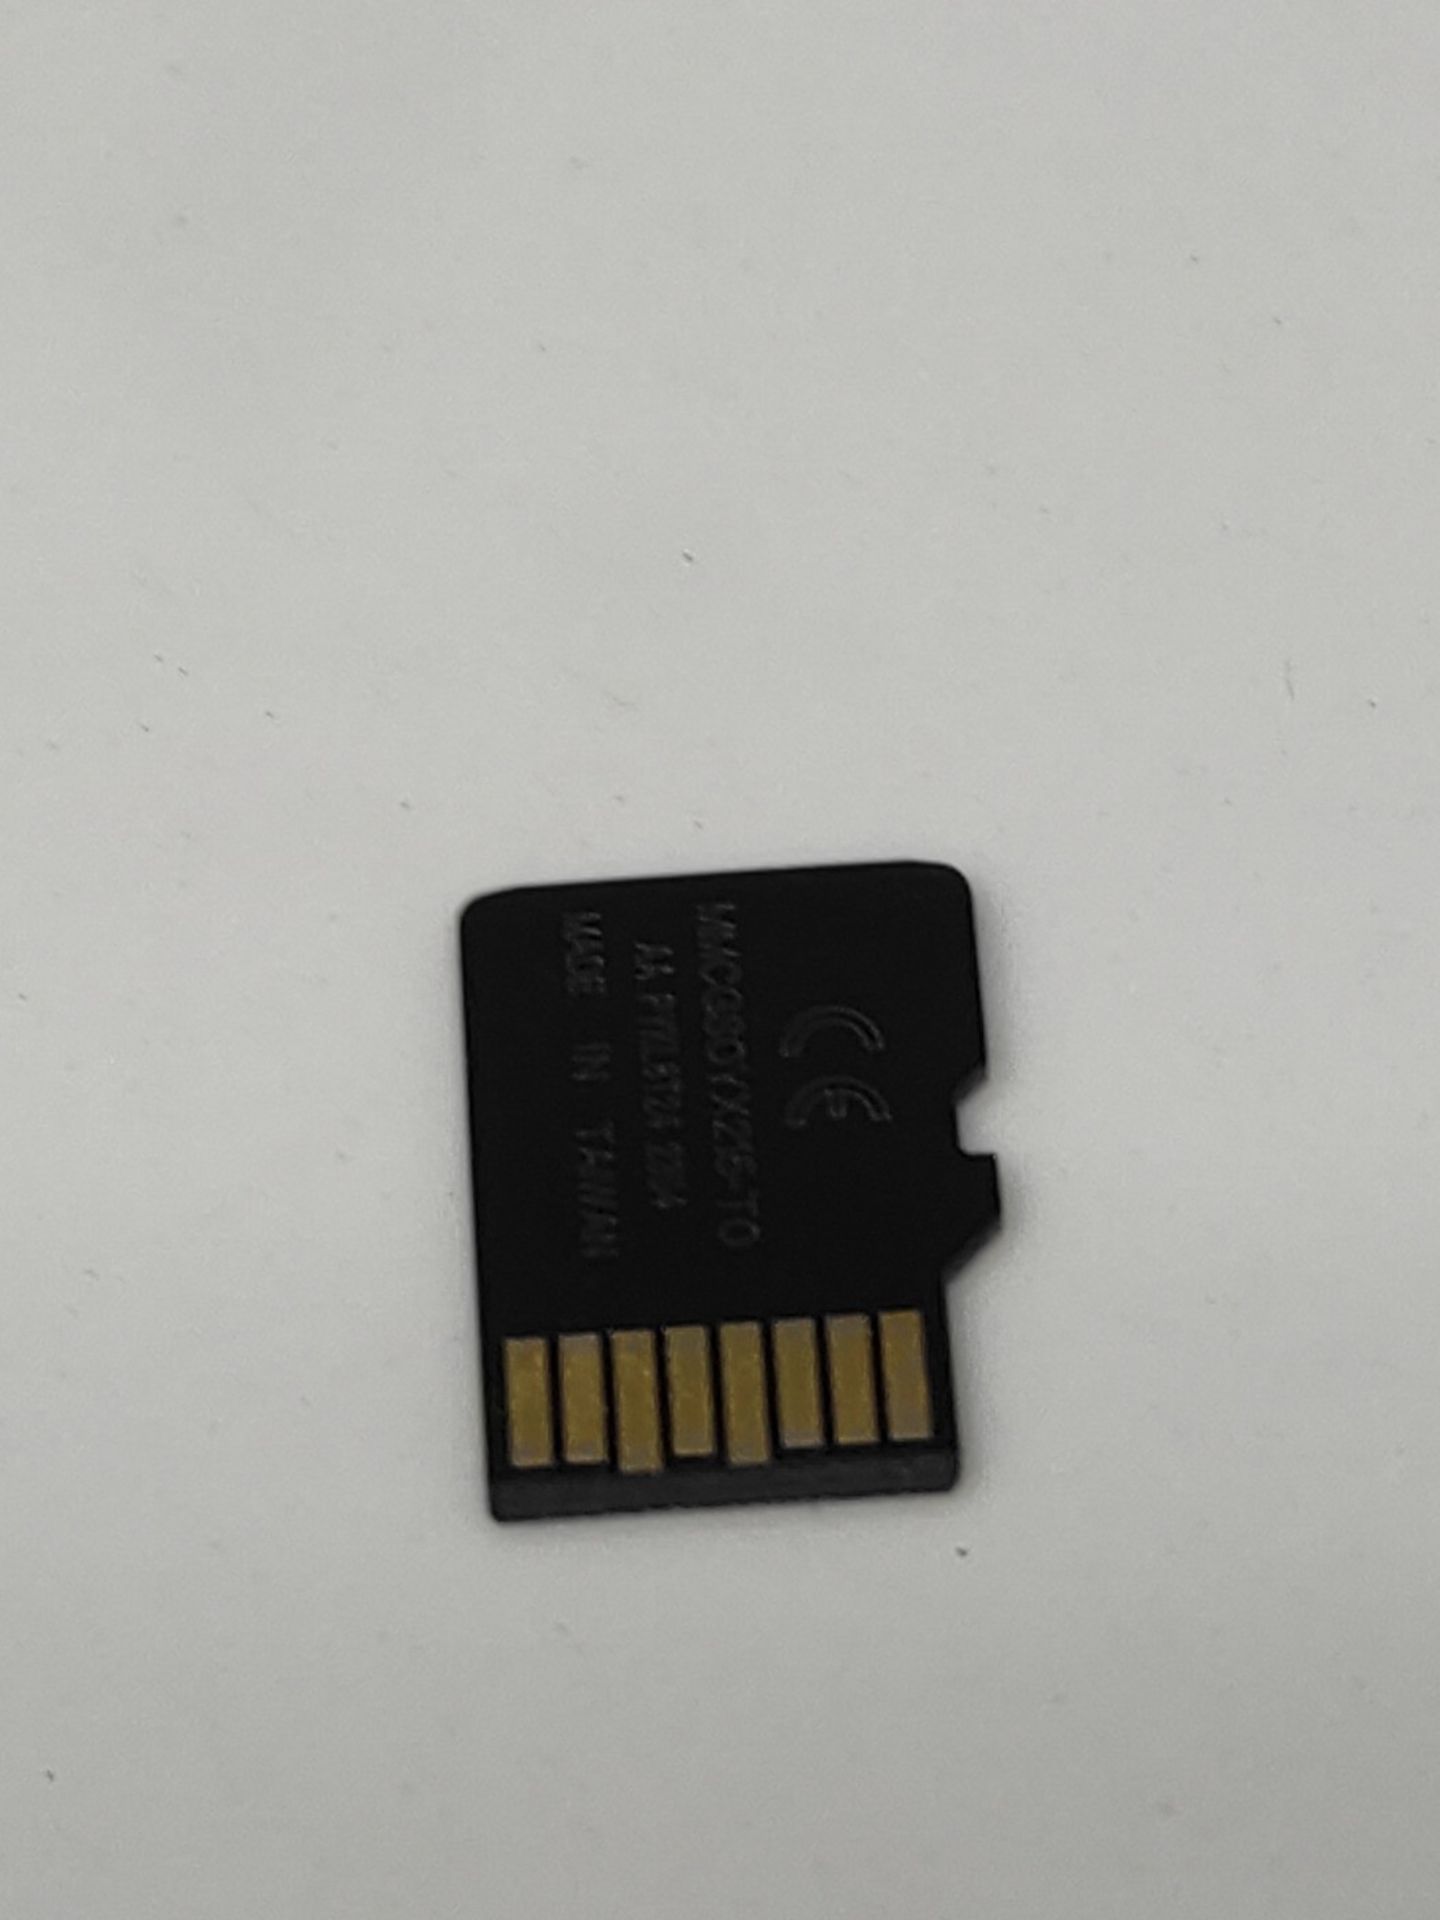 Mini-SD card, 512 GB, Micro-SD card, TF card, high speed, 512 GB, Class 10, memory car - Image 2 of 4